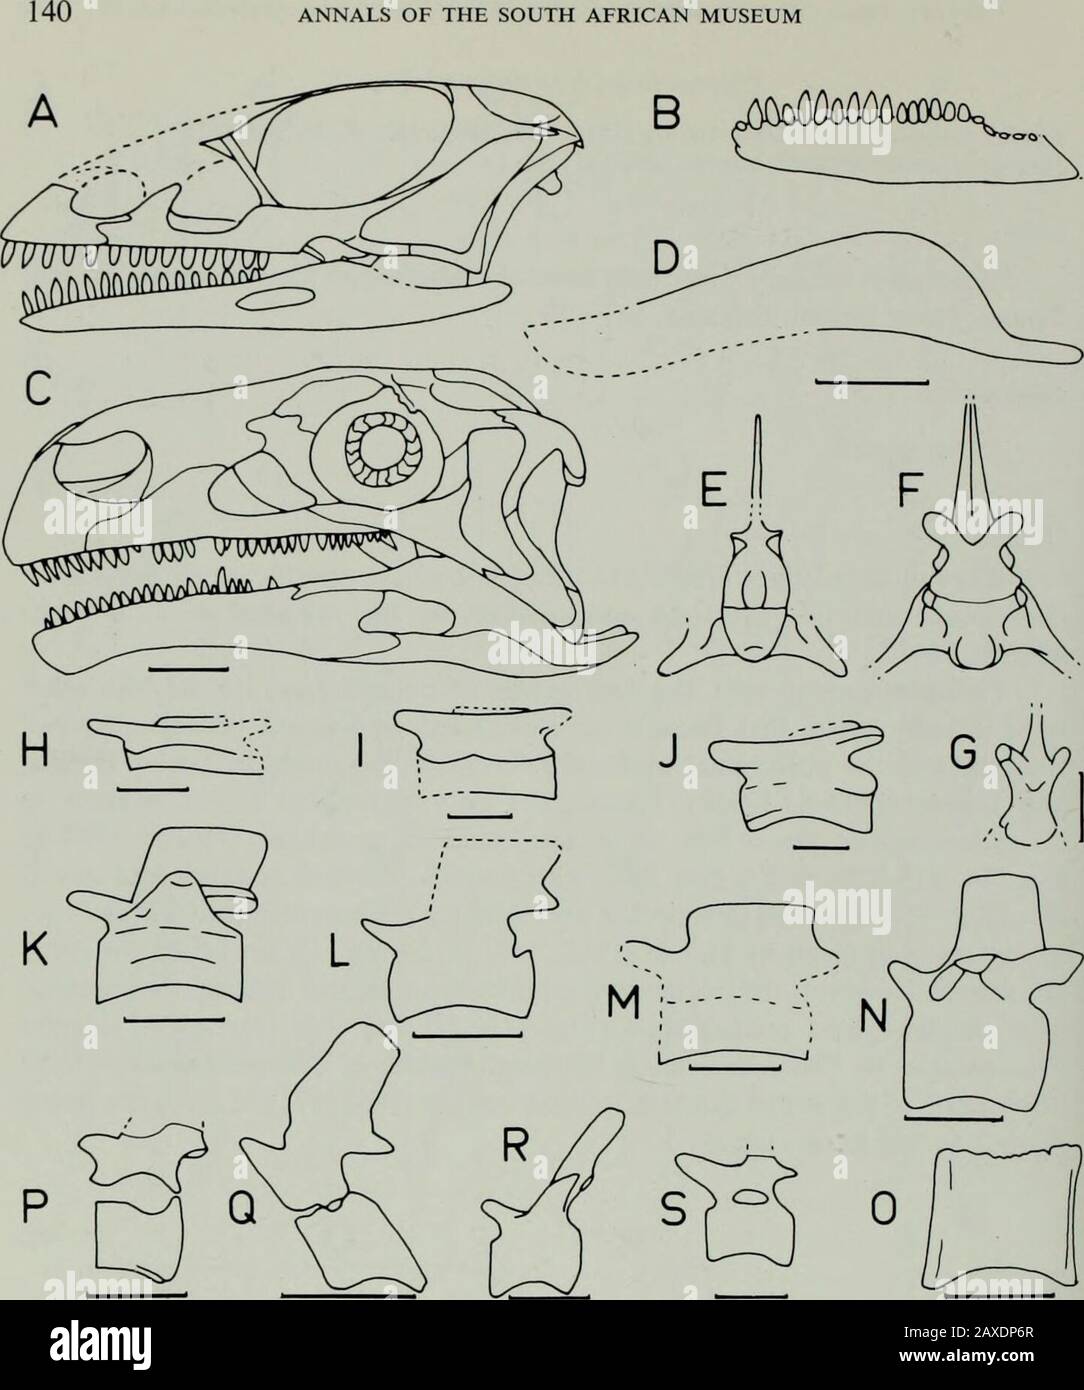 Annals of the South African MuseumAnnale van die Suid-Afrikaanse Museum . m Van Hoepen (1920«). C. Thecodontosaurus browni, from Huene (1932). D. Efraasiadiagnostica, SMNS 12668. E. Anchisauruspolyzelus, YPM 1883. F. Thecodontosaurus antiquus,metatarsal 111, from Huene (1907^08). G. Anchisaurus capensis, SAM-990. H. Lufengosaurushuenei, figured as Gyposaurus sinensis by Young (1941). I. Hortalotarsus skirtopodus, figuredas Thecodontosaurus skirtopodus by Huene (1906). J. Ammosaurus major, YPM 208. K. Ammo-saurus cf. major, from Galton (1971). L. Massospondylus harriesi, figured as M. browni by Stock Photo